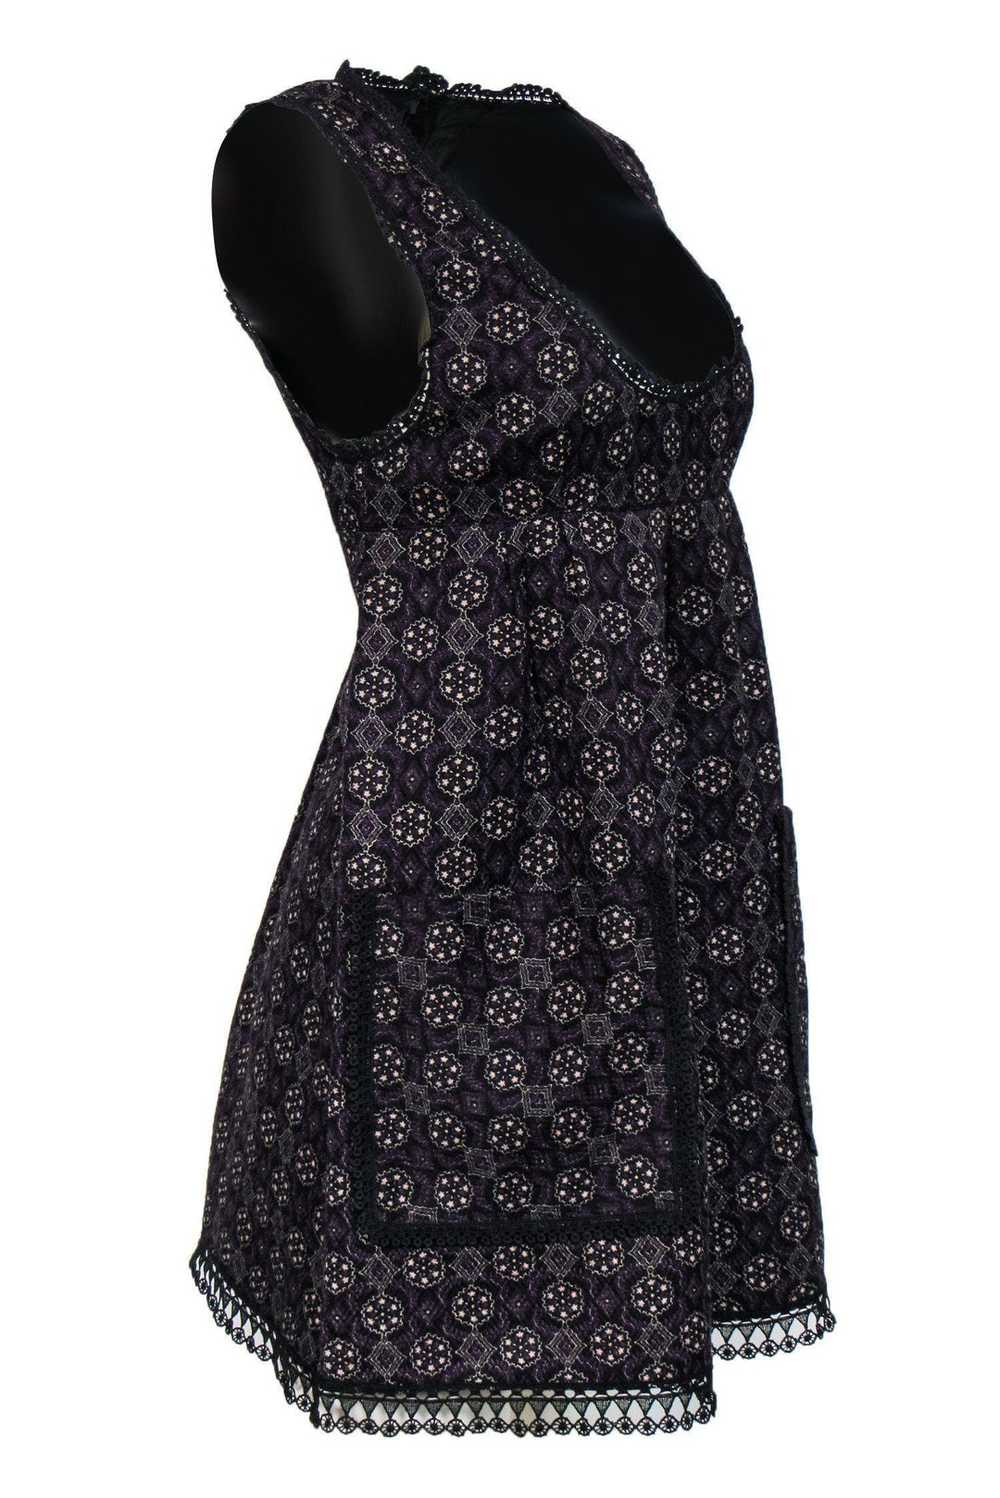 Anna Sui - Purple Printed Cotton & Silk Dress Sz 2 - image 2